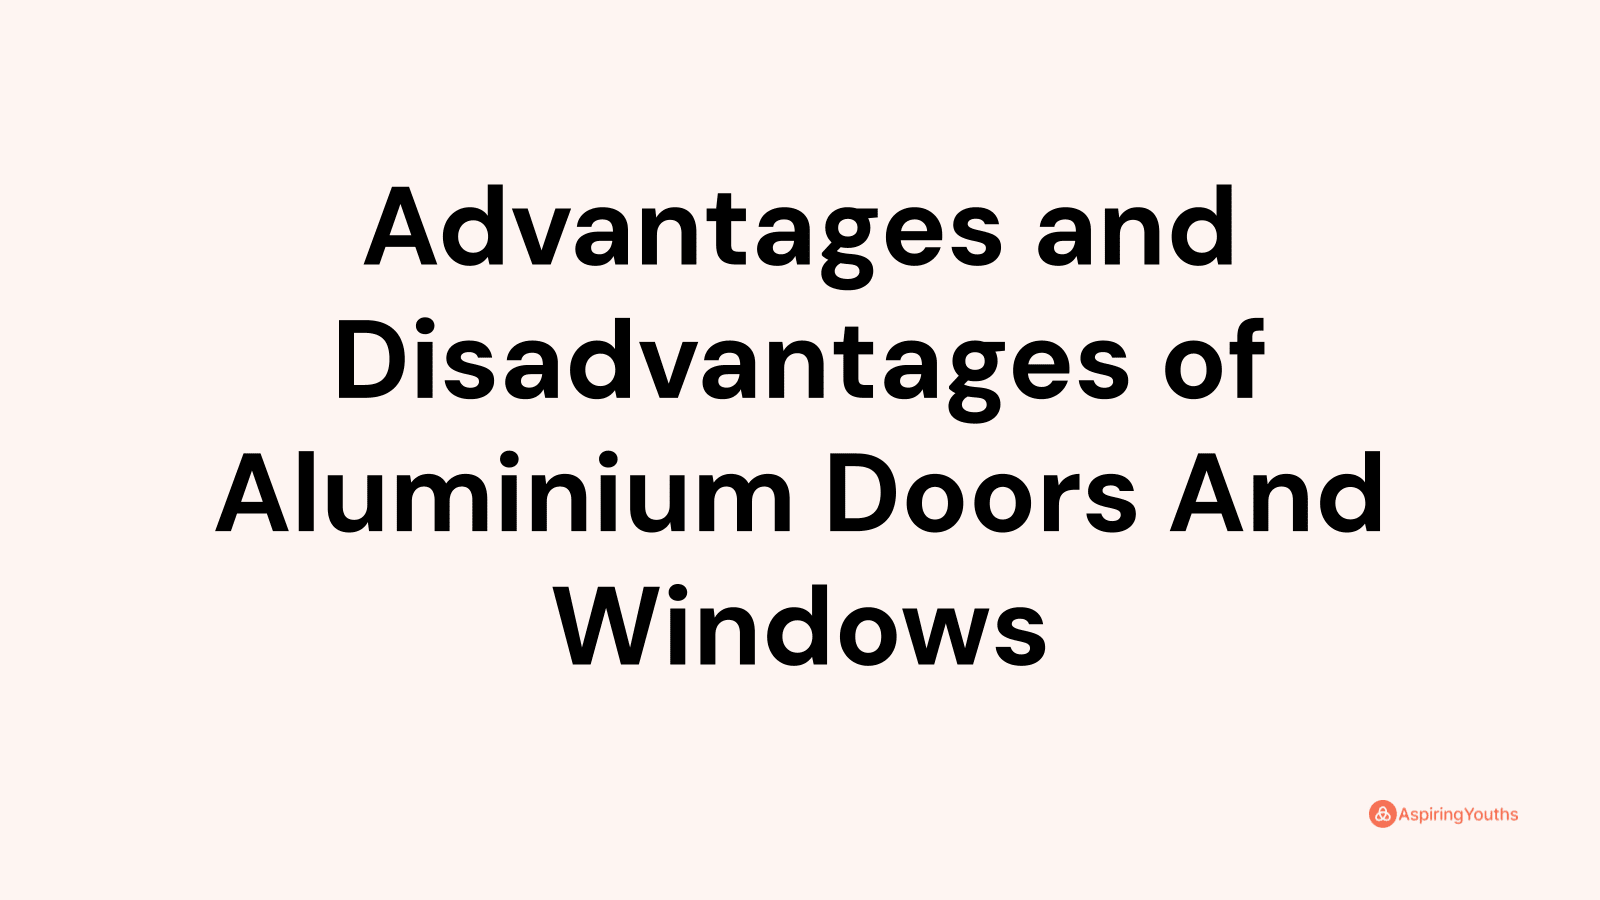 Advantages and disadvantages of Aluminium Doors And Windows